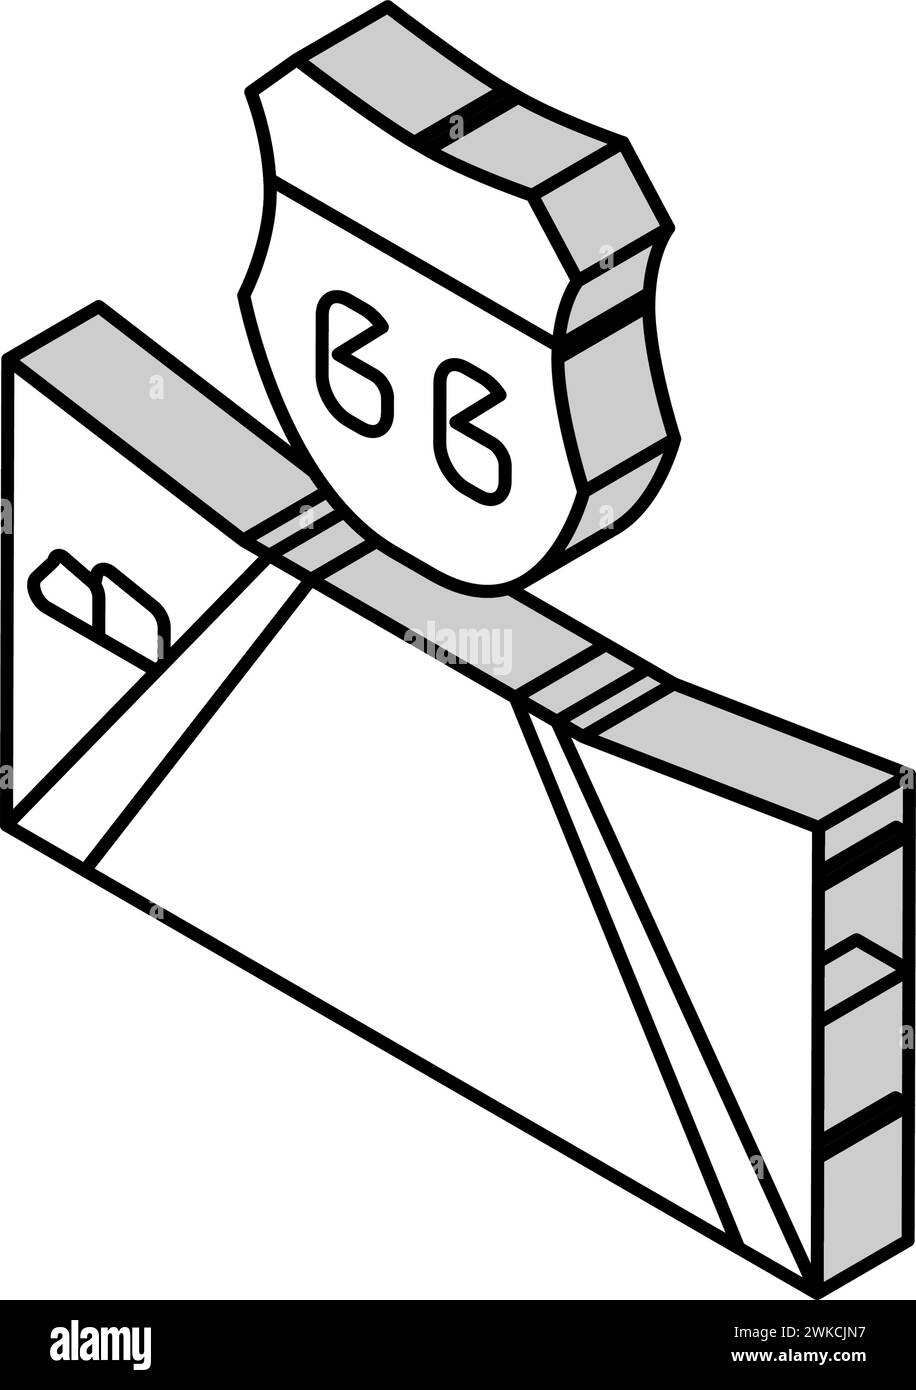 highway 66 isometric icon vector illustration Stock Vector